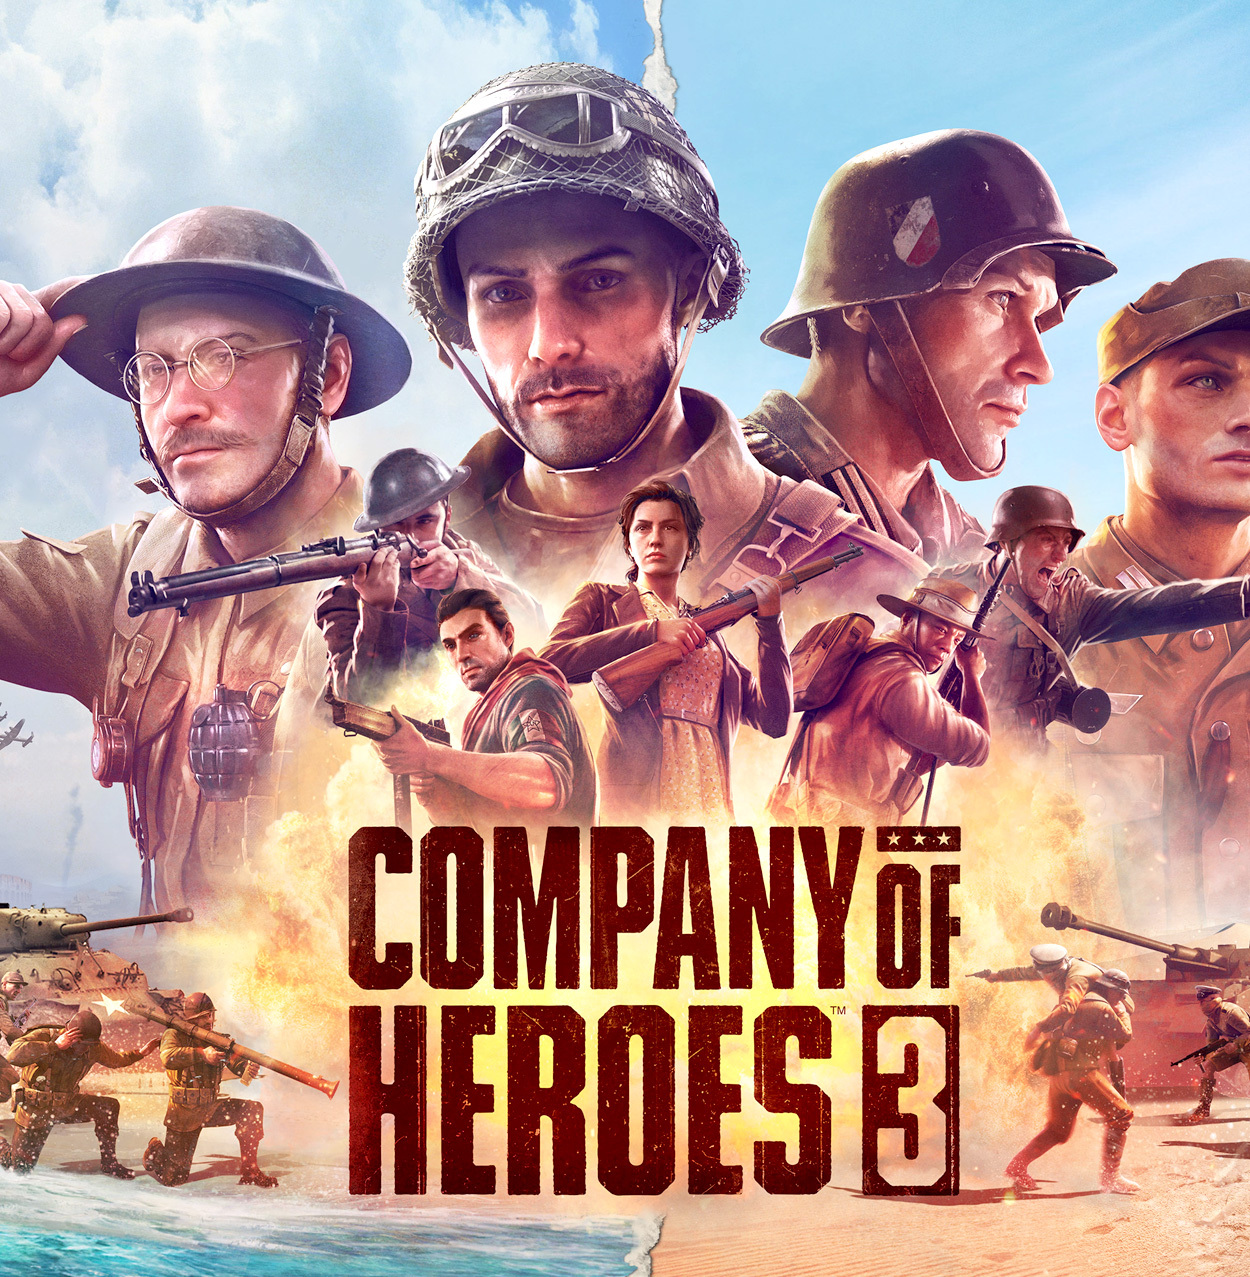 Company of Heroes 3 + Company of Heroes 2 / АККАУНТ